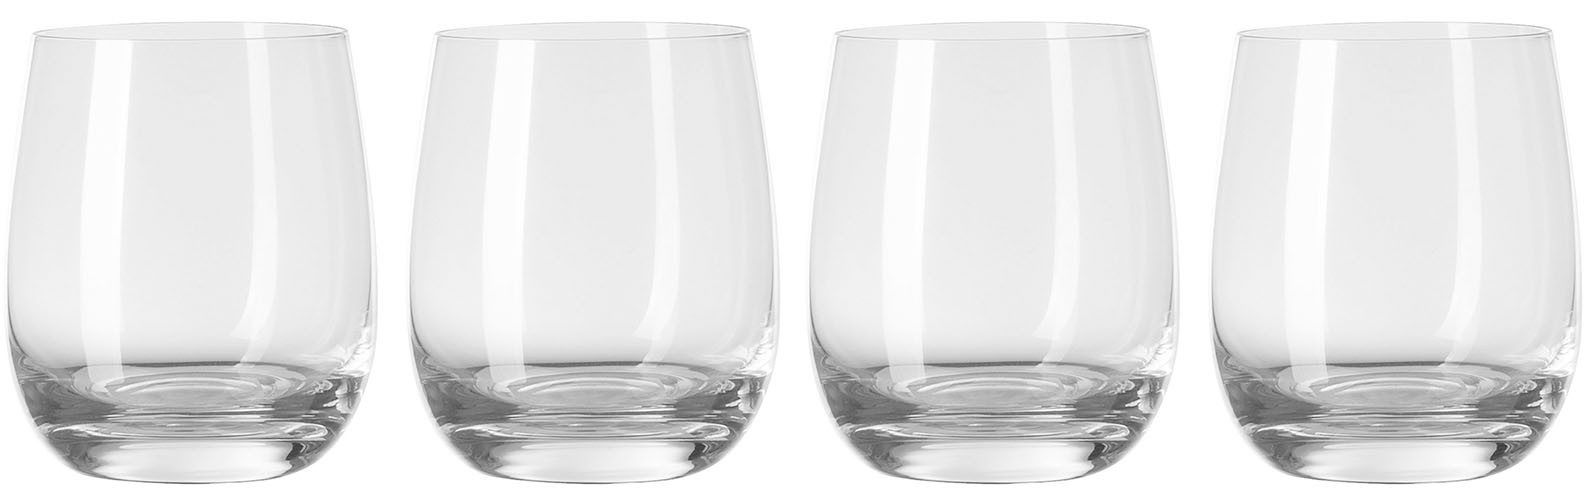 Fink Glas PREMIO, Glas, Trinkglas, 4er Set, transparent, Wasserglas, Cocktailglas